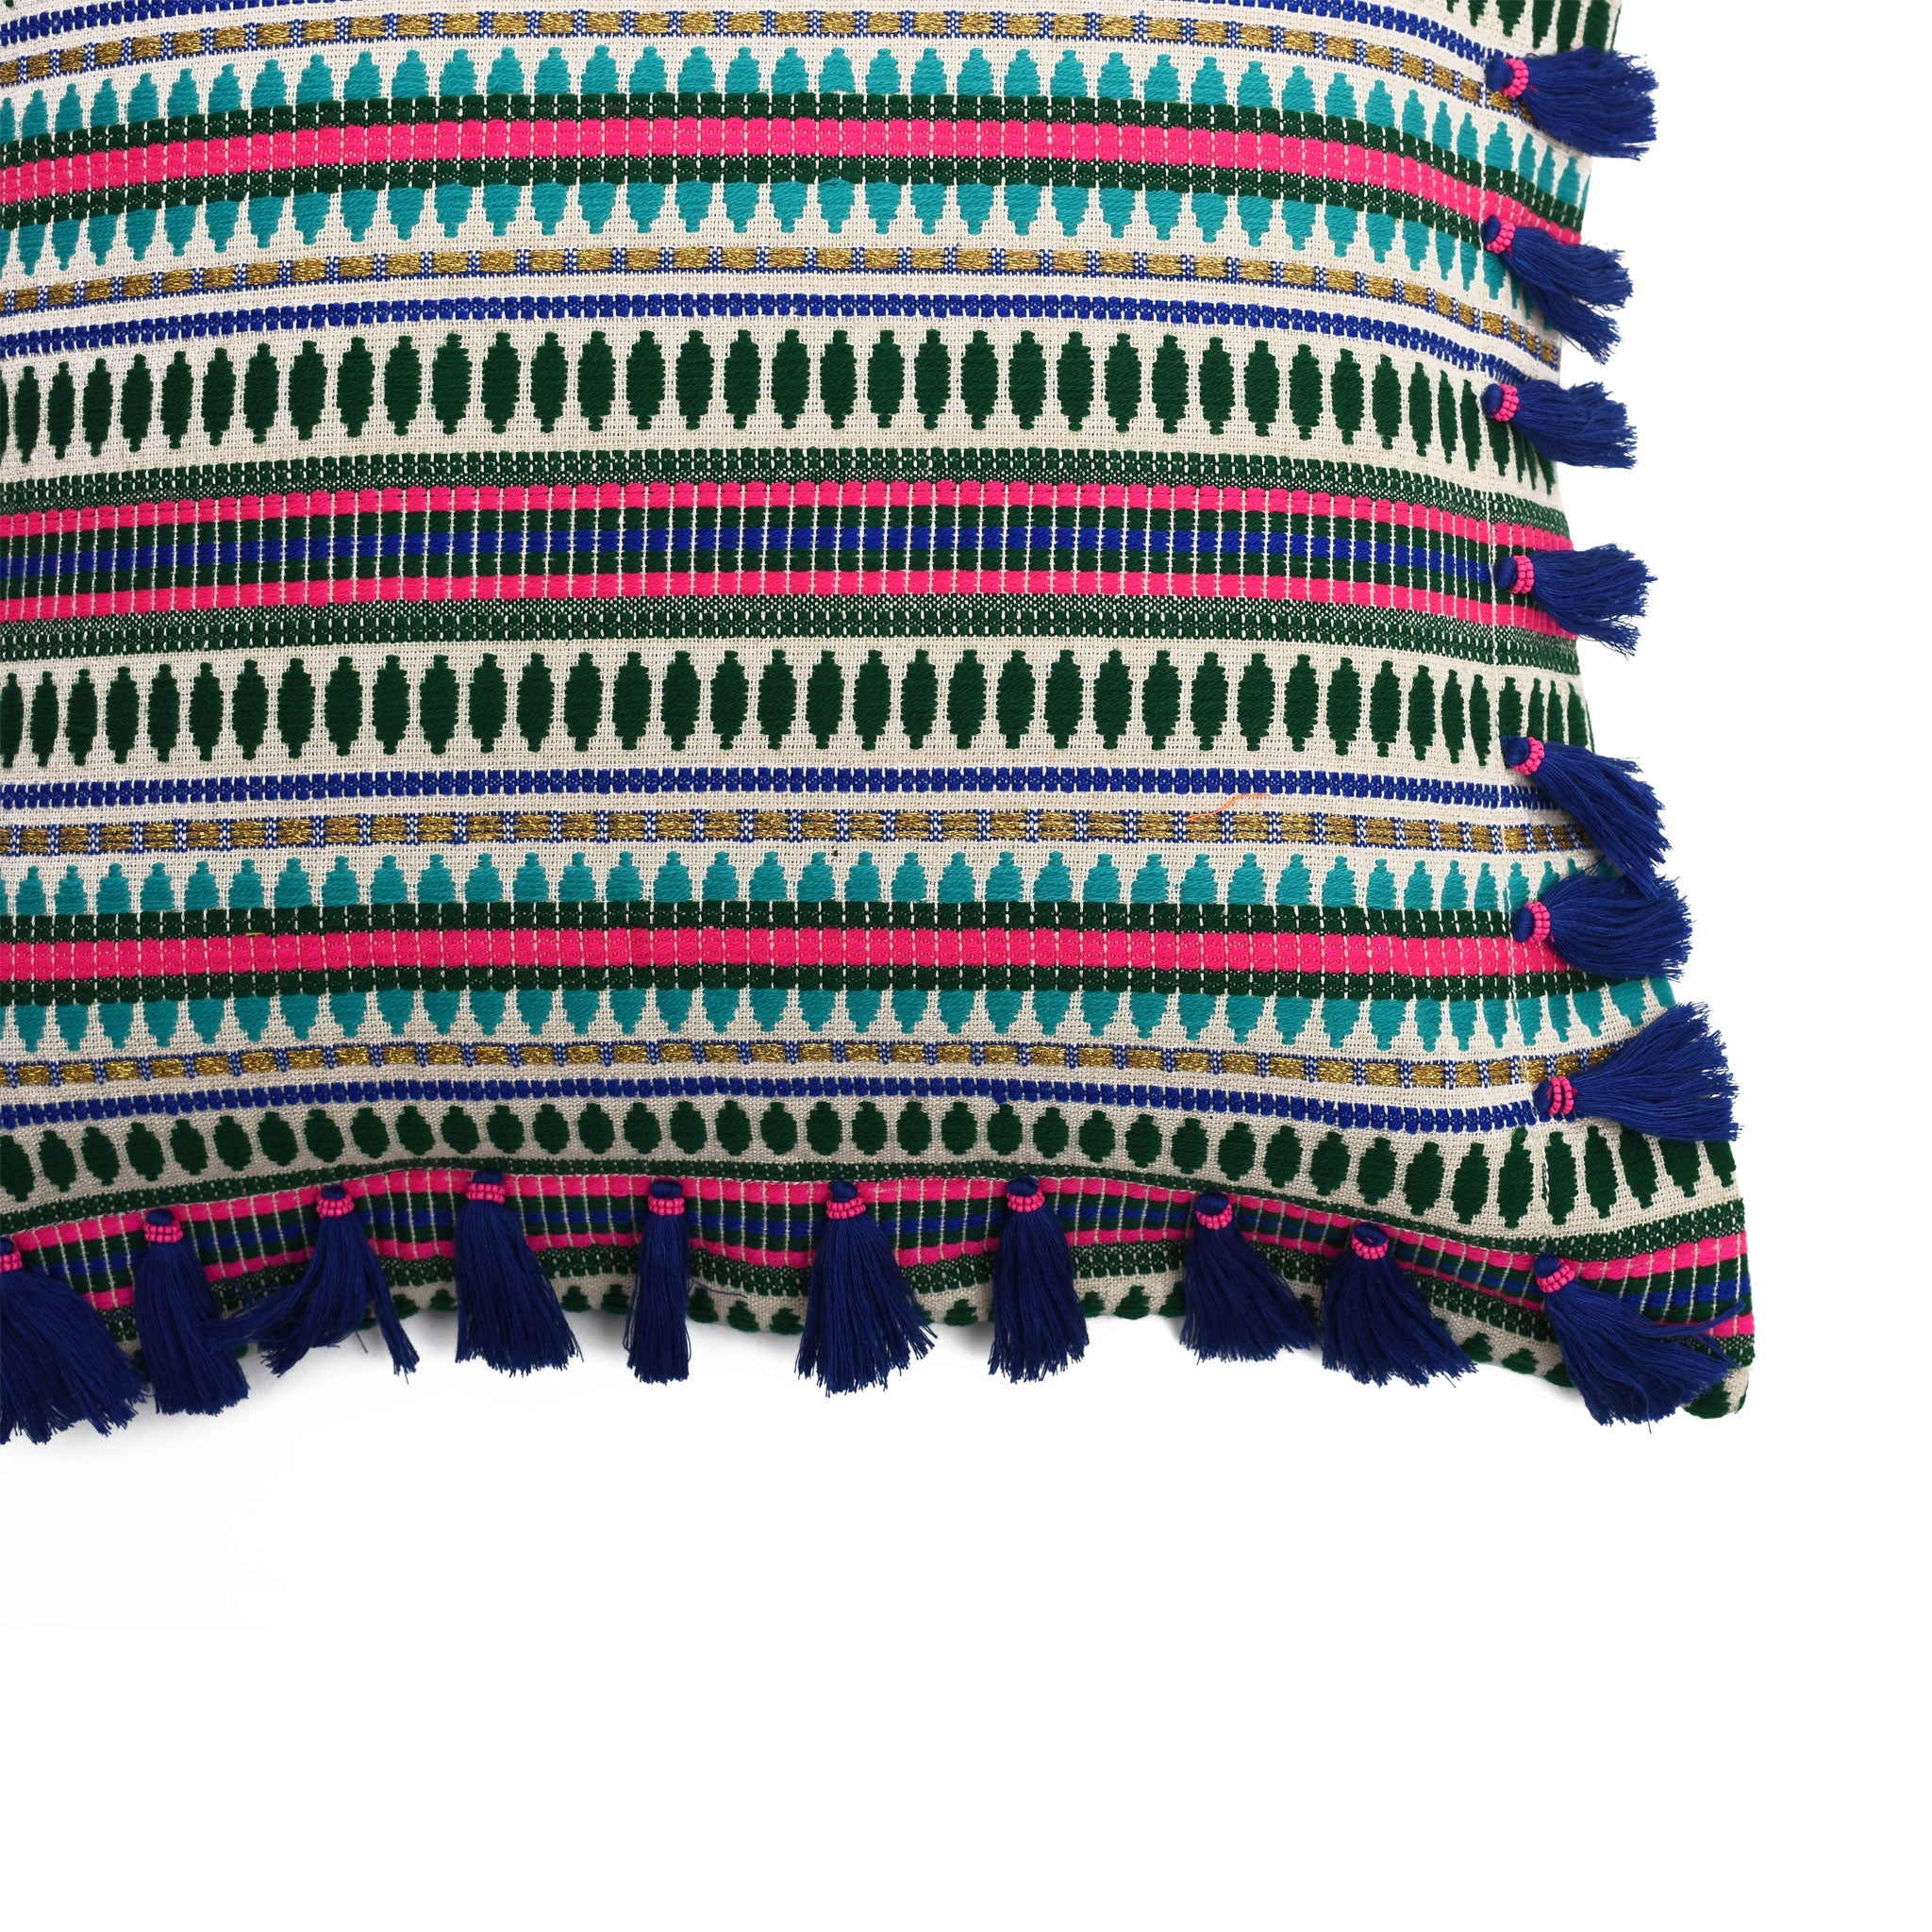 Bivain---C0106-close-up_-_Bedouin-style_indigo_cotton_tasselled_cushion.jpg